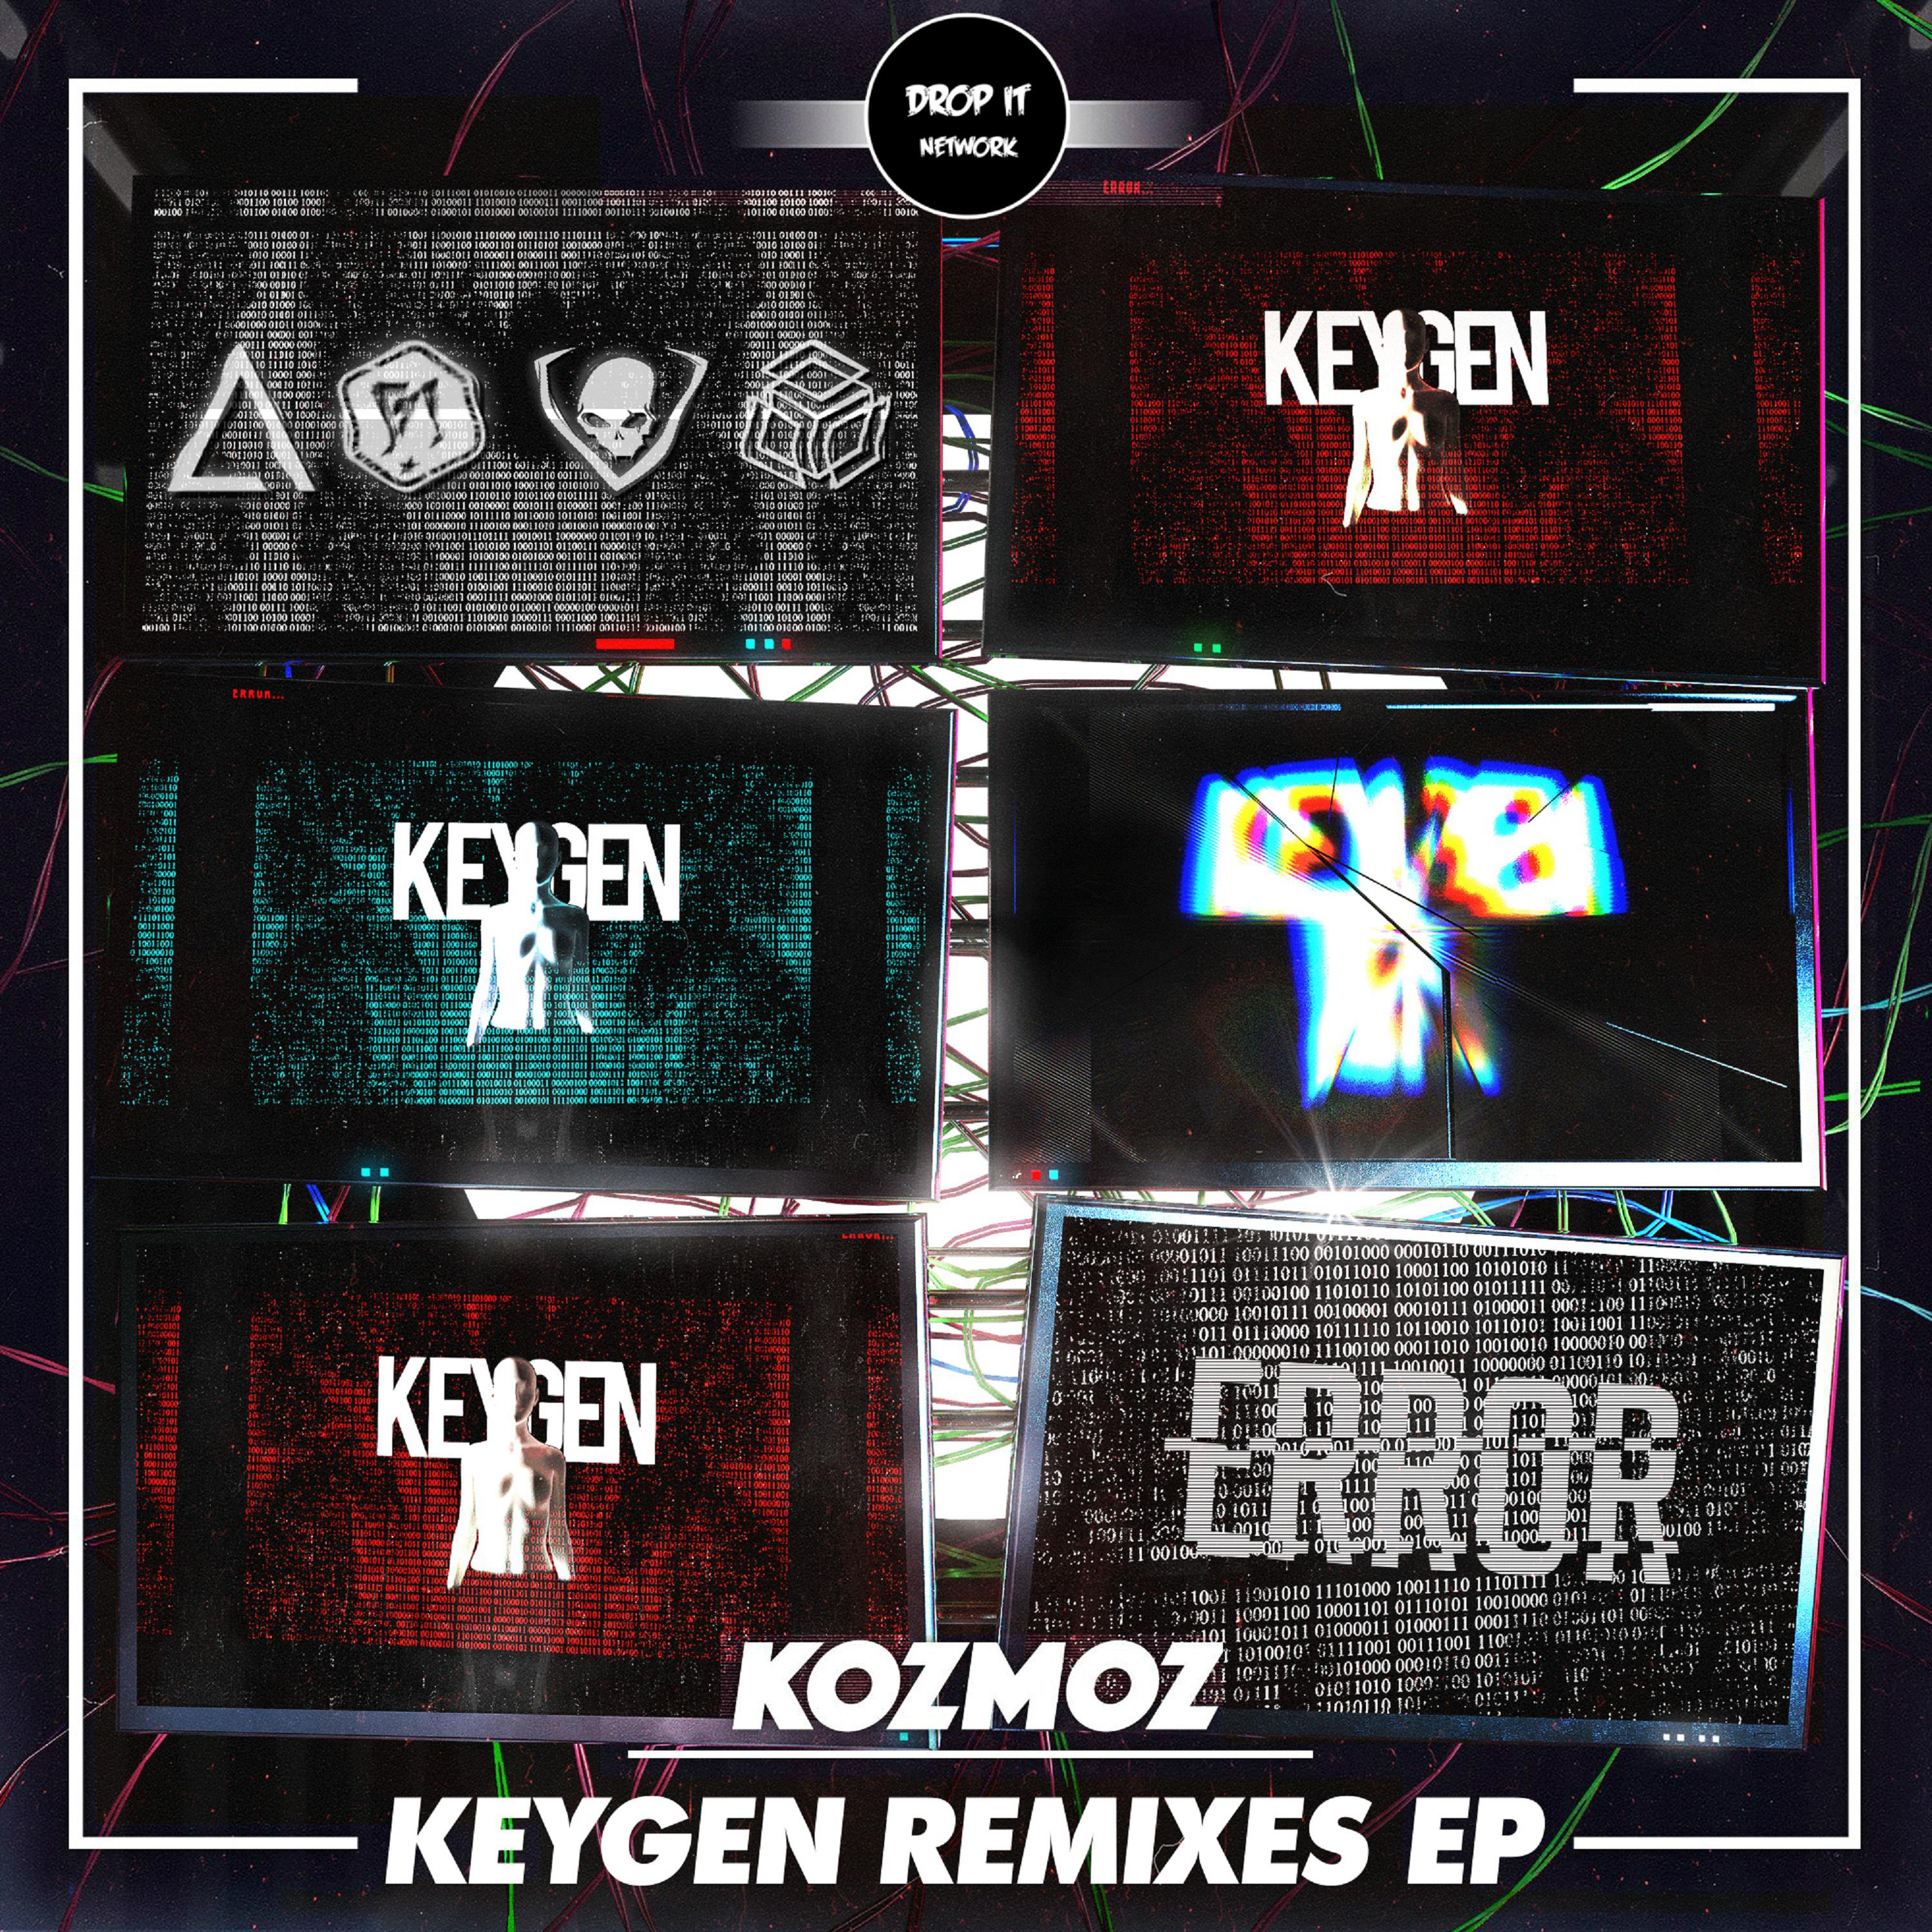 Keygen (Ace Remix) [DROP IT NETWORK EXCLUSIVE]